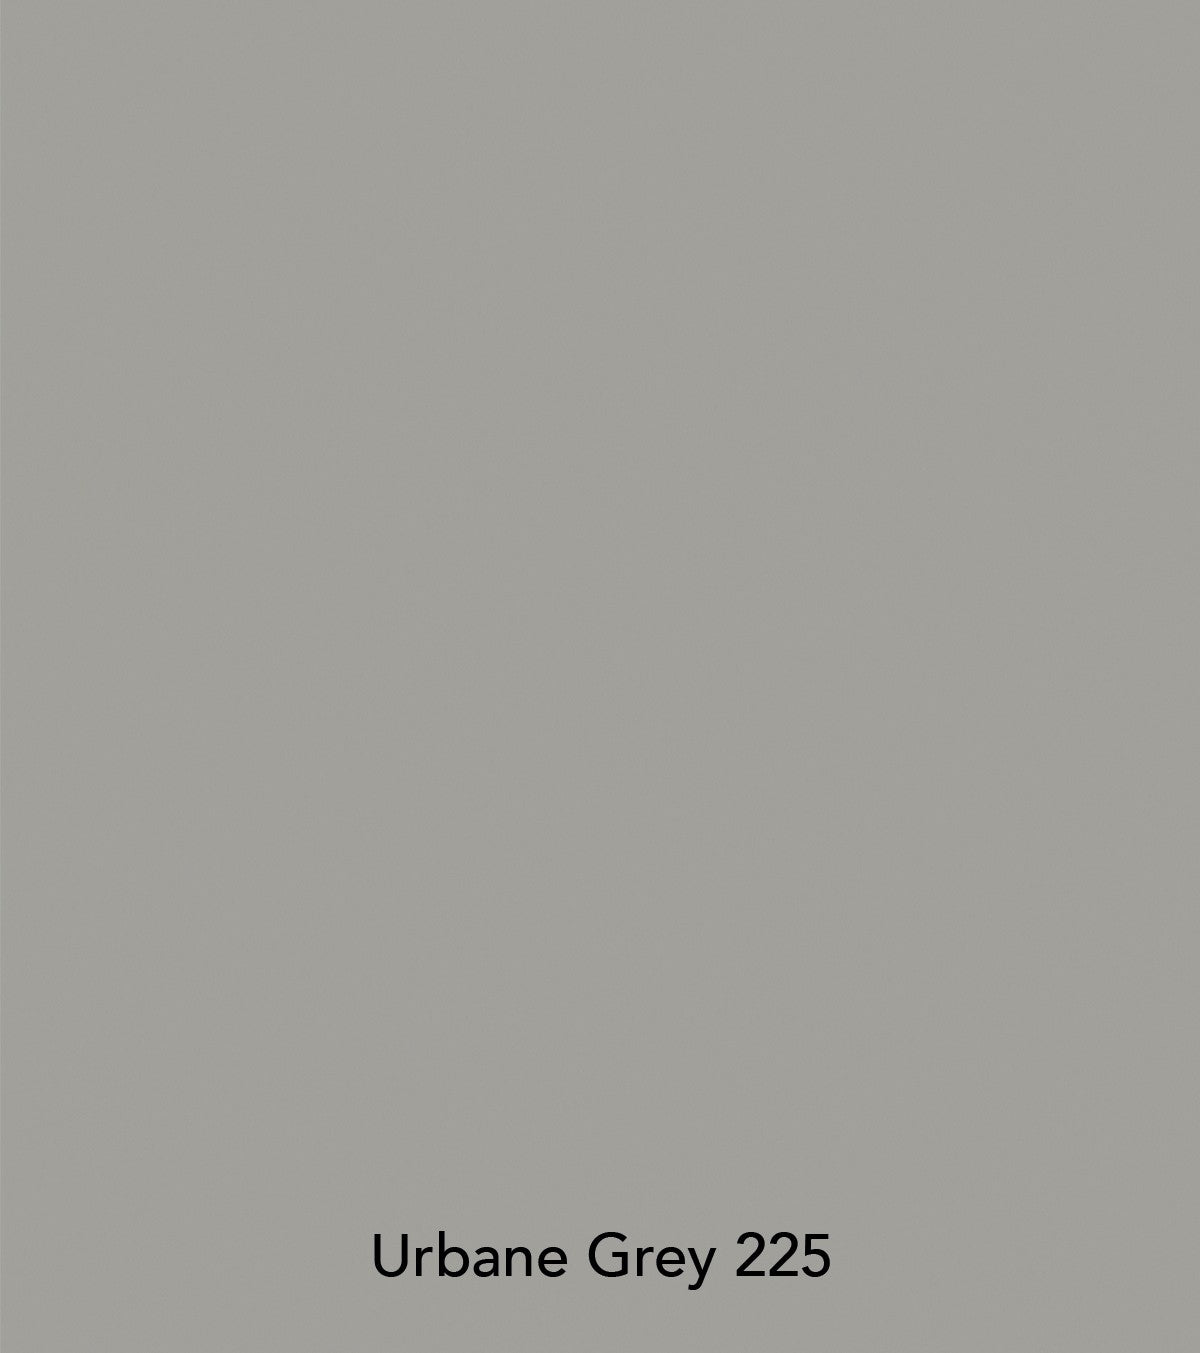 Peinture Little Greene - Urbane grey (225)